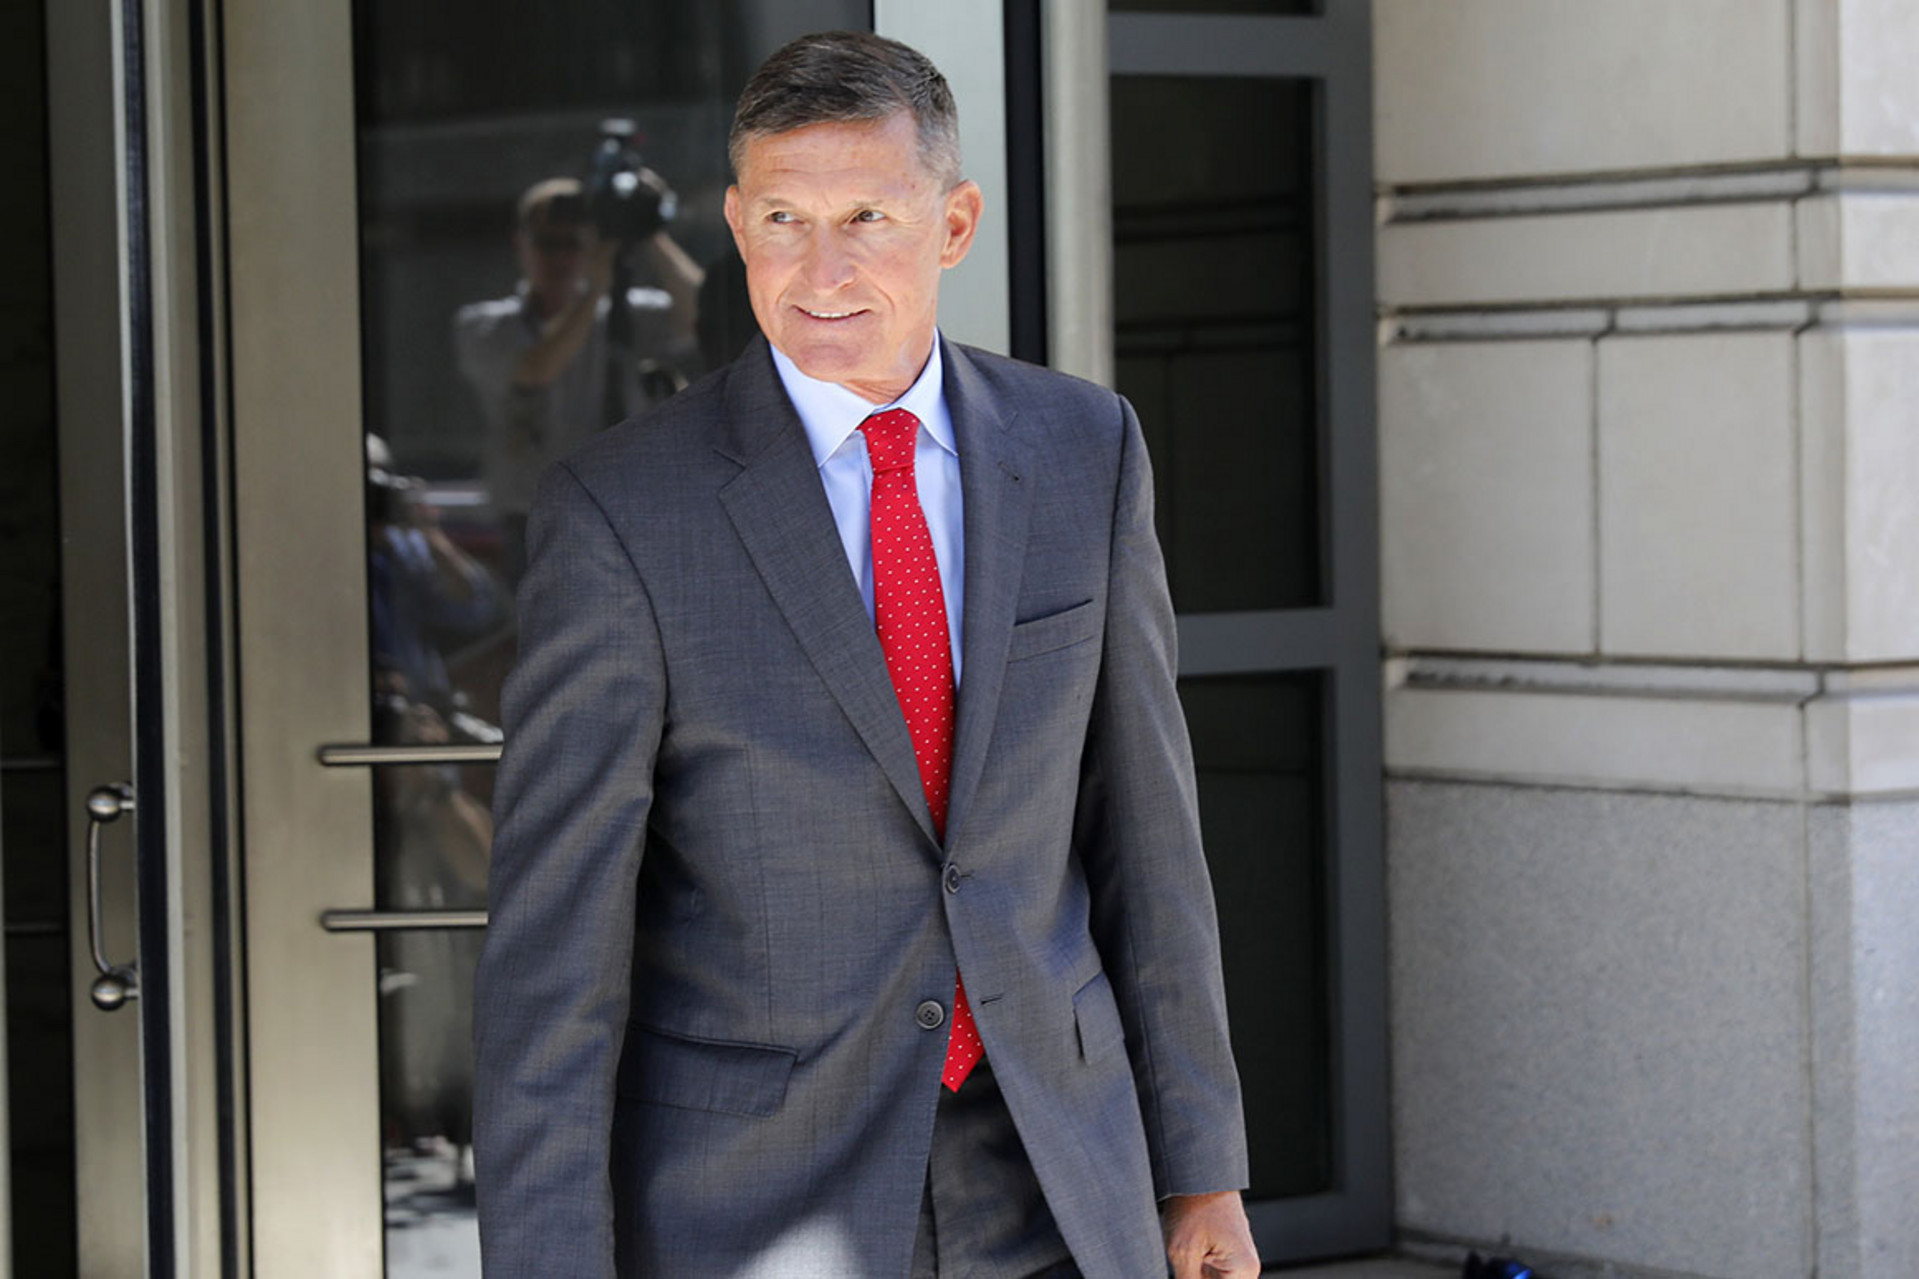 DOJ drops criminal case against Michael Flynn